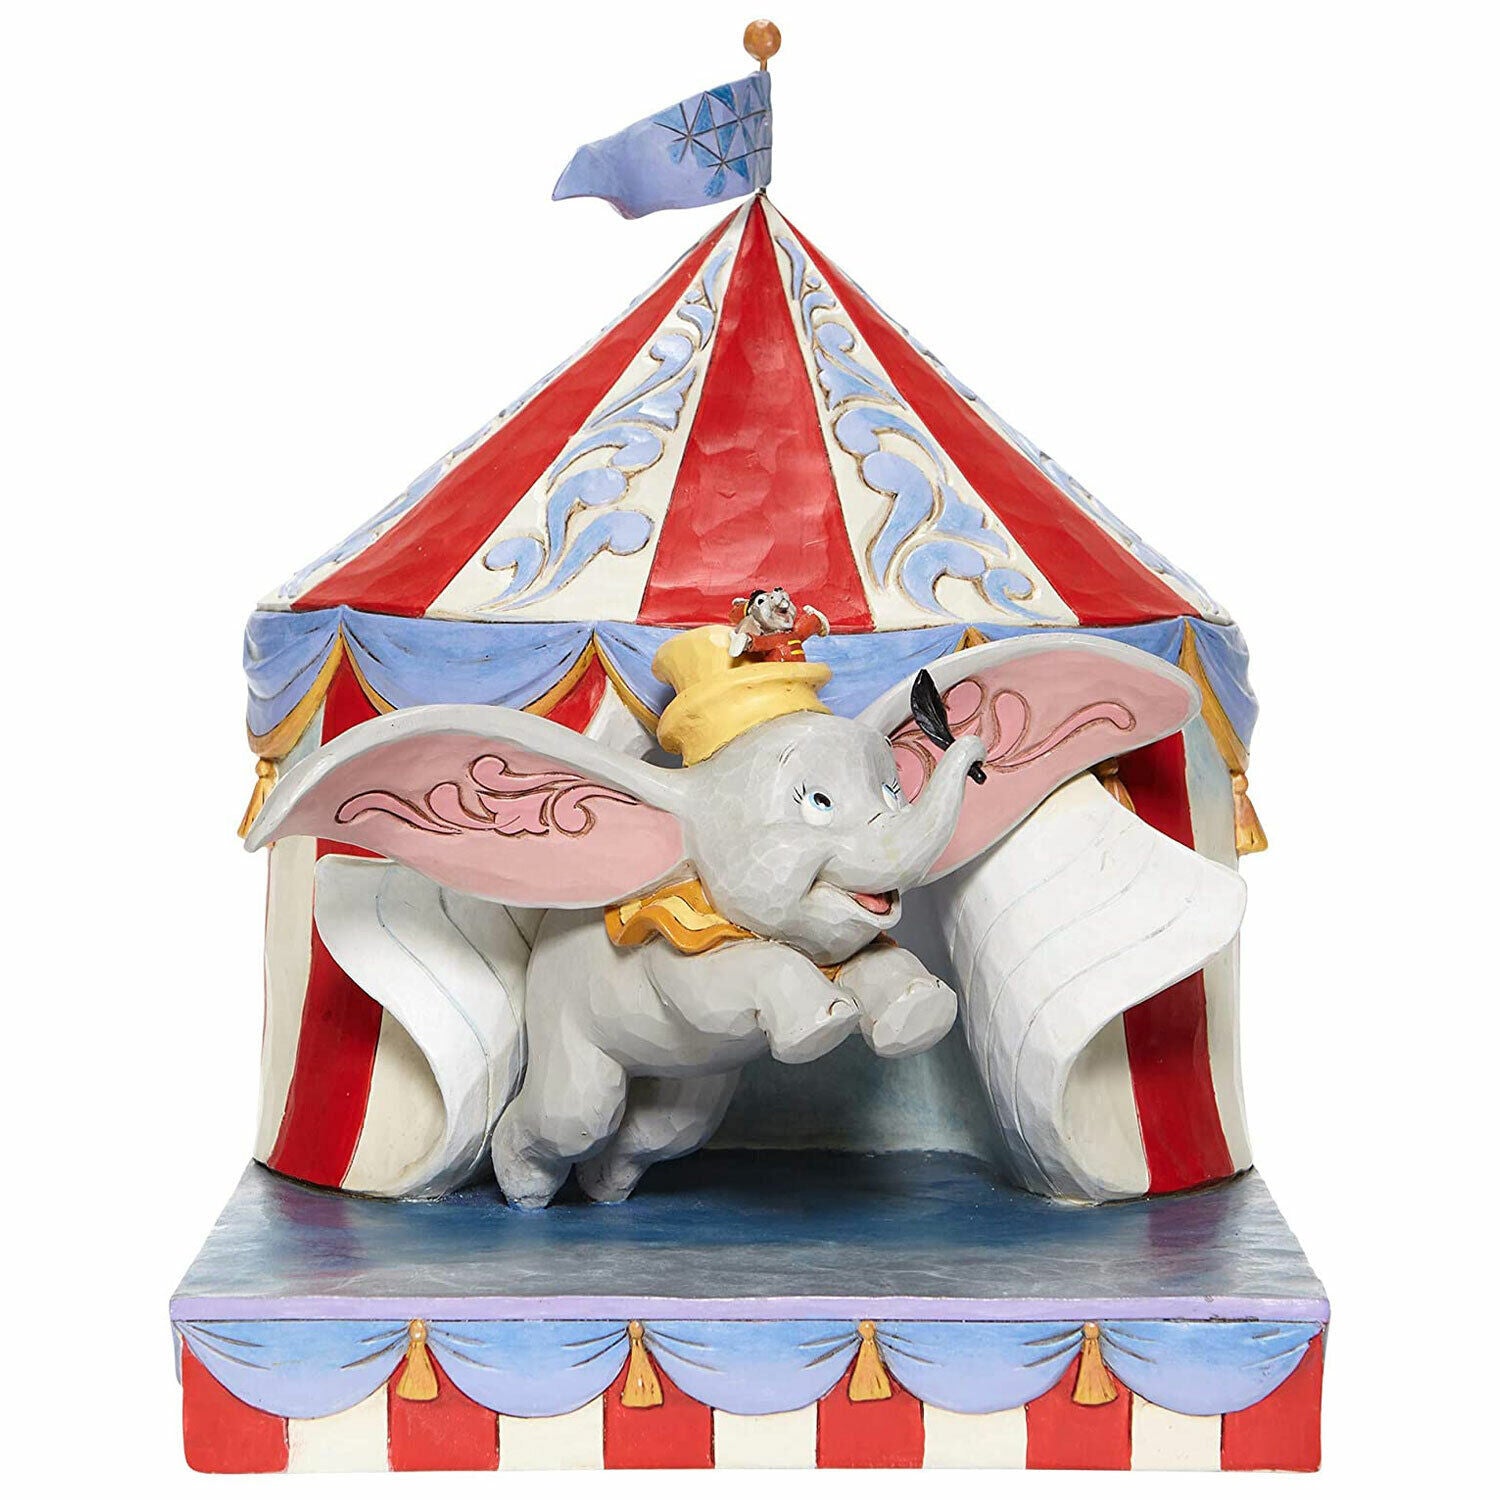 Disney Traditions Figurine - Over the Big Top (Dumbo) - NEW!